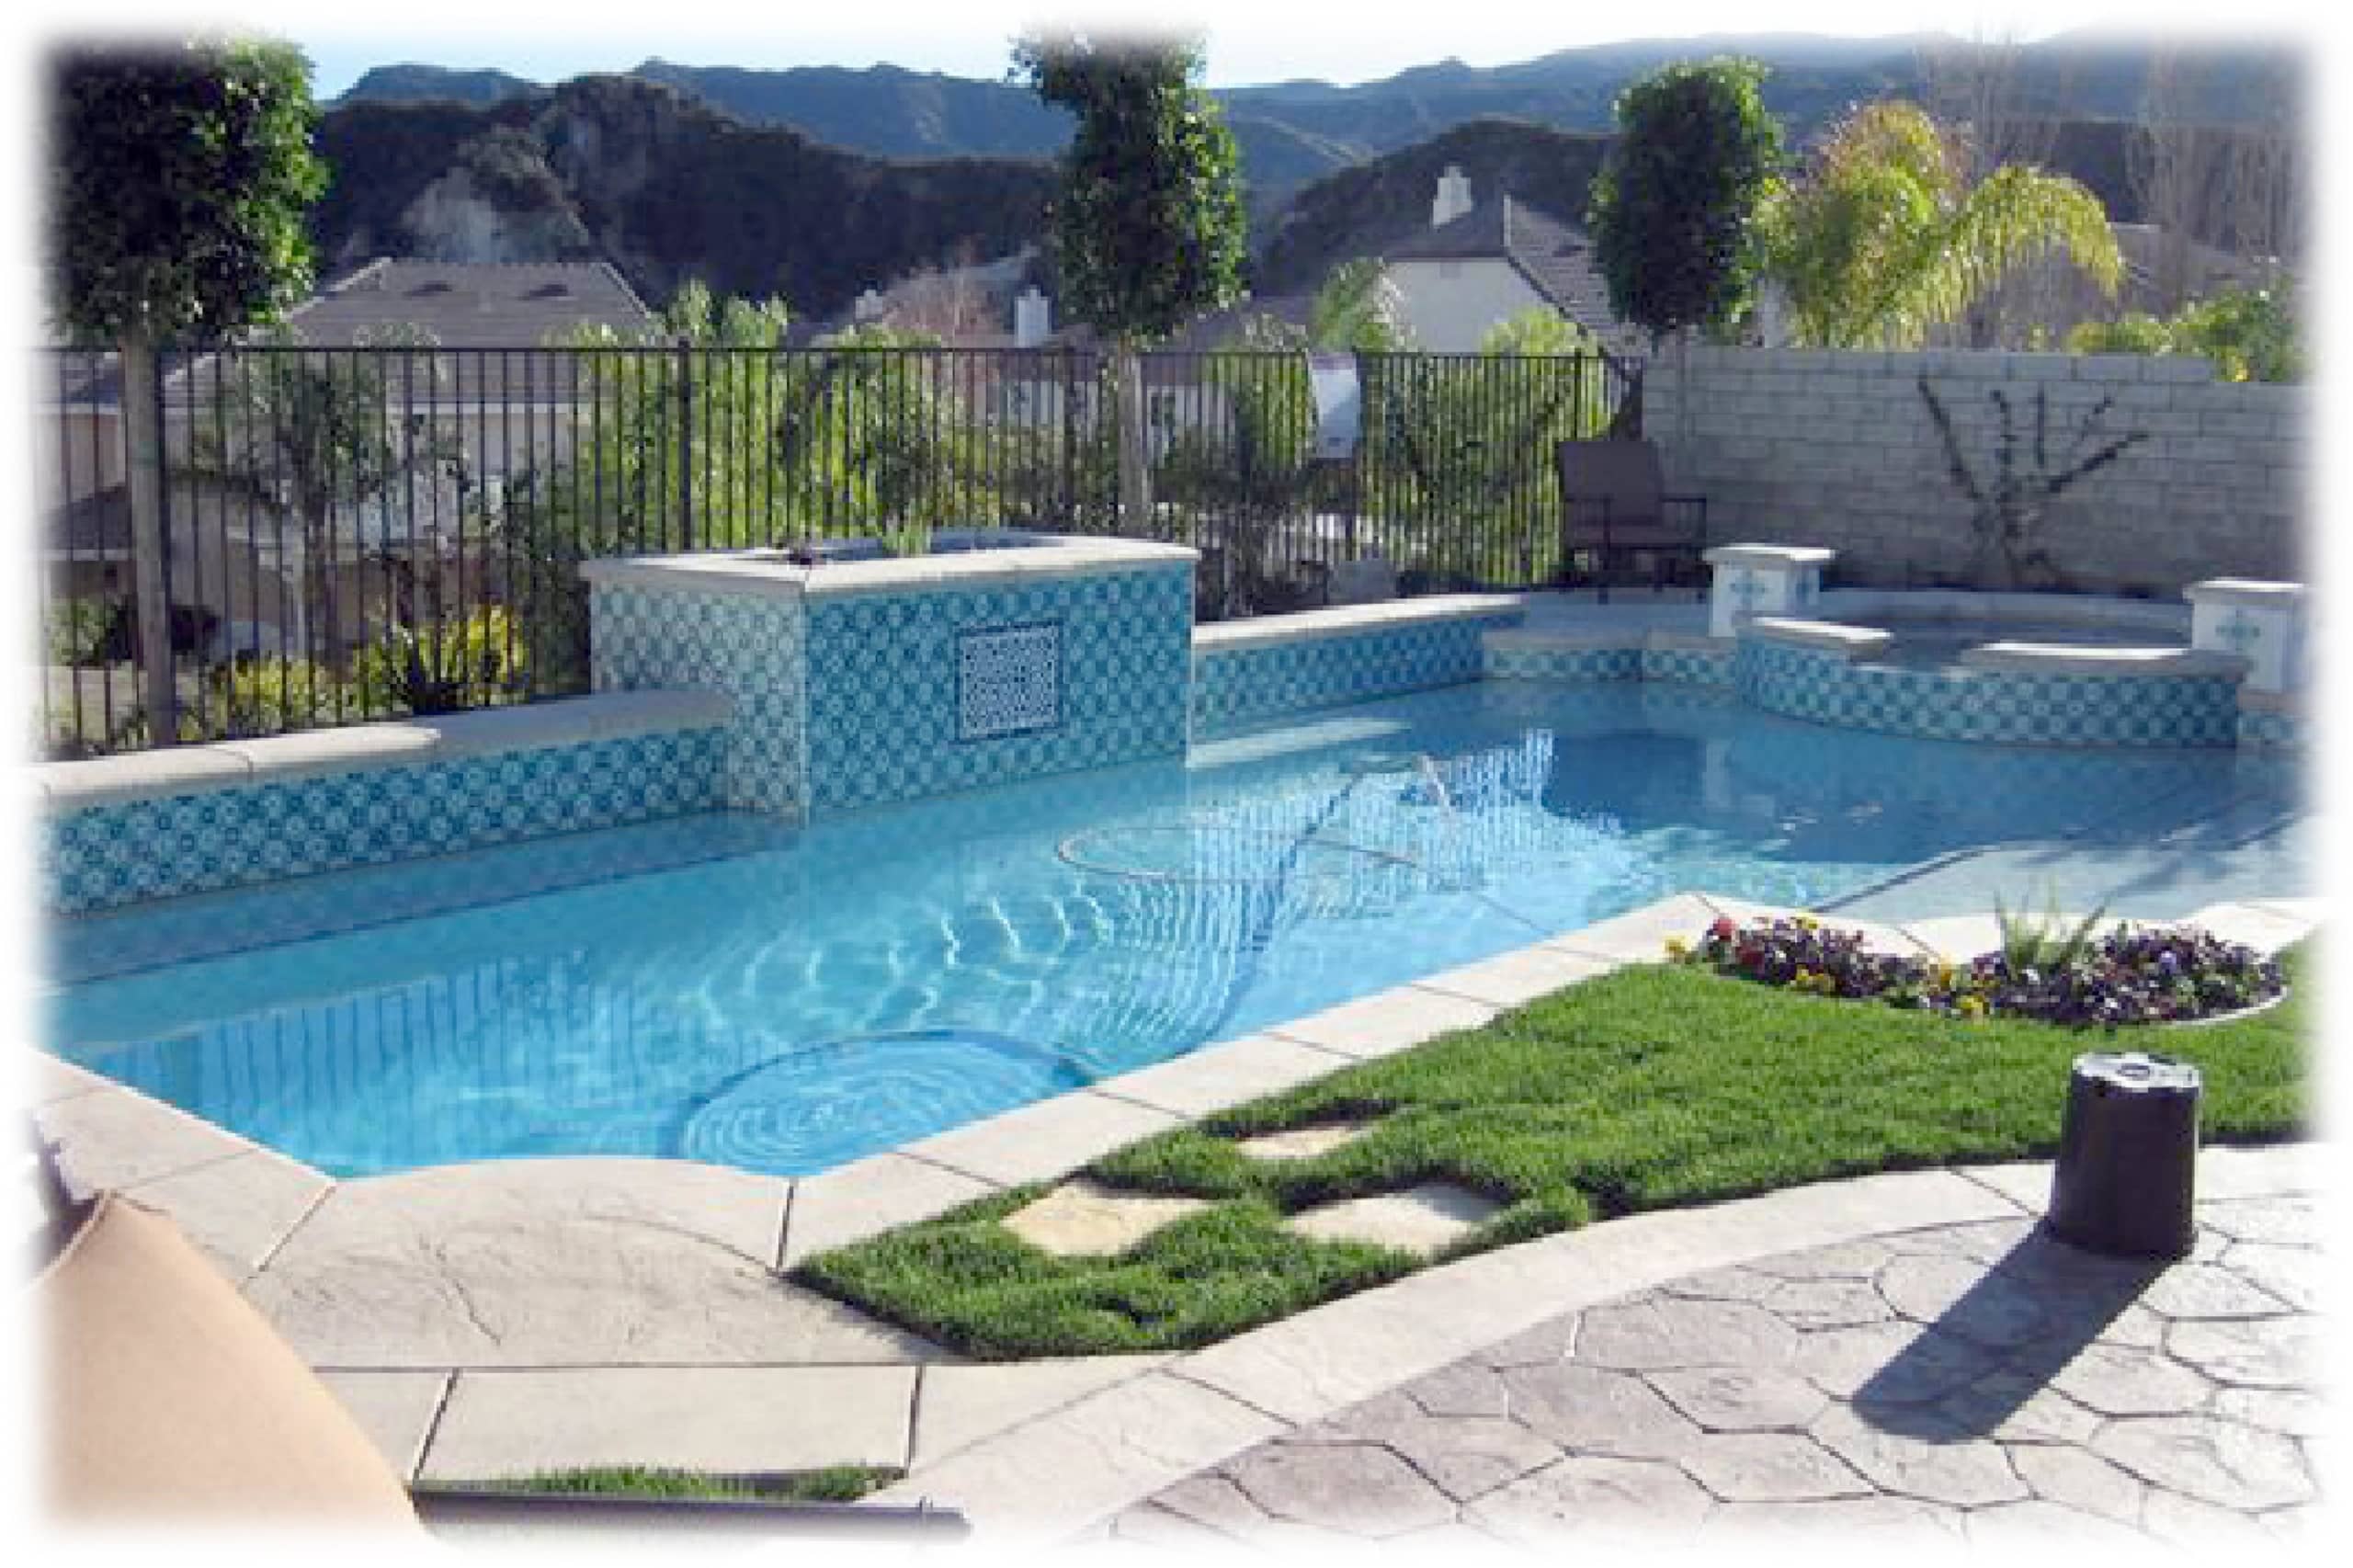 Ron Massino waterline pool tile installation for a beautiful swimming pool design idea